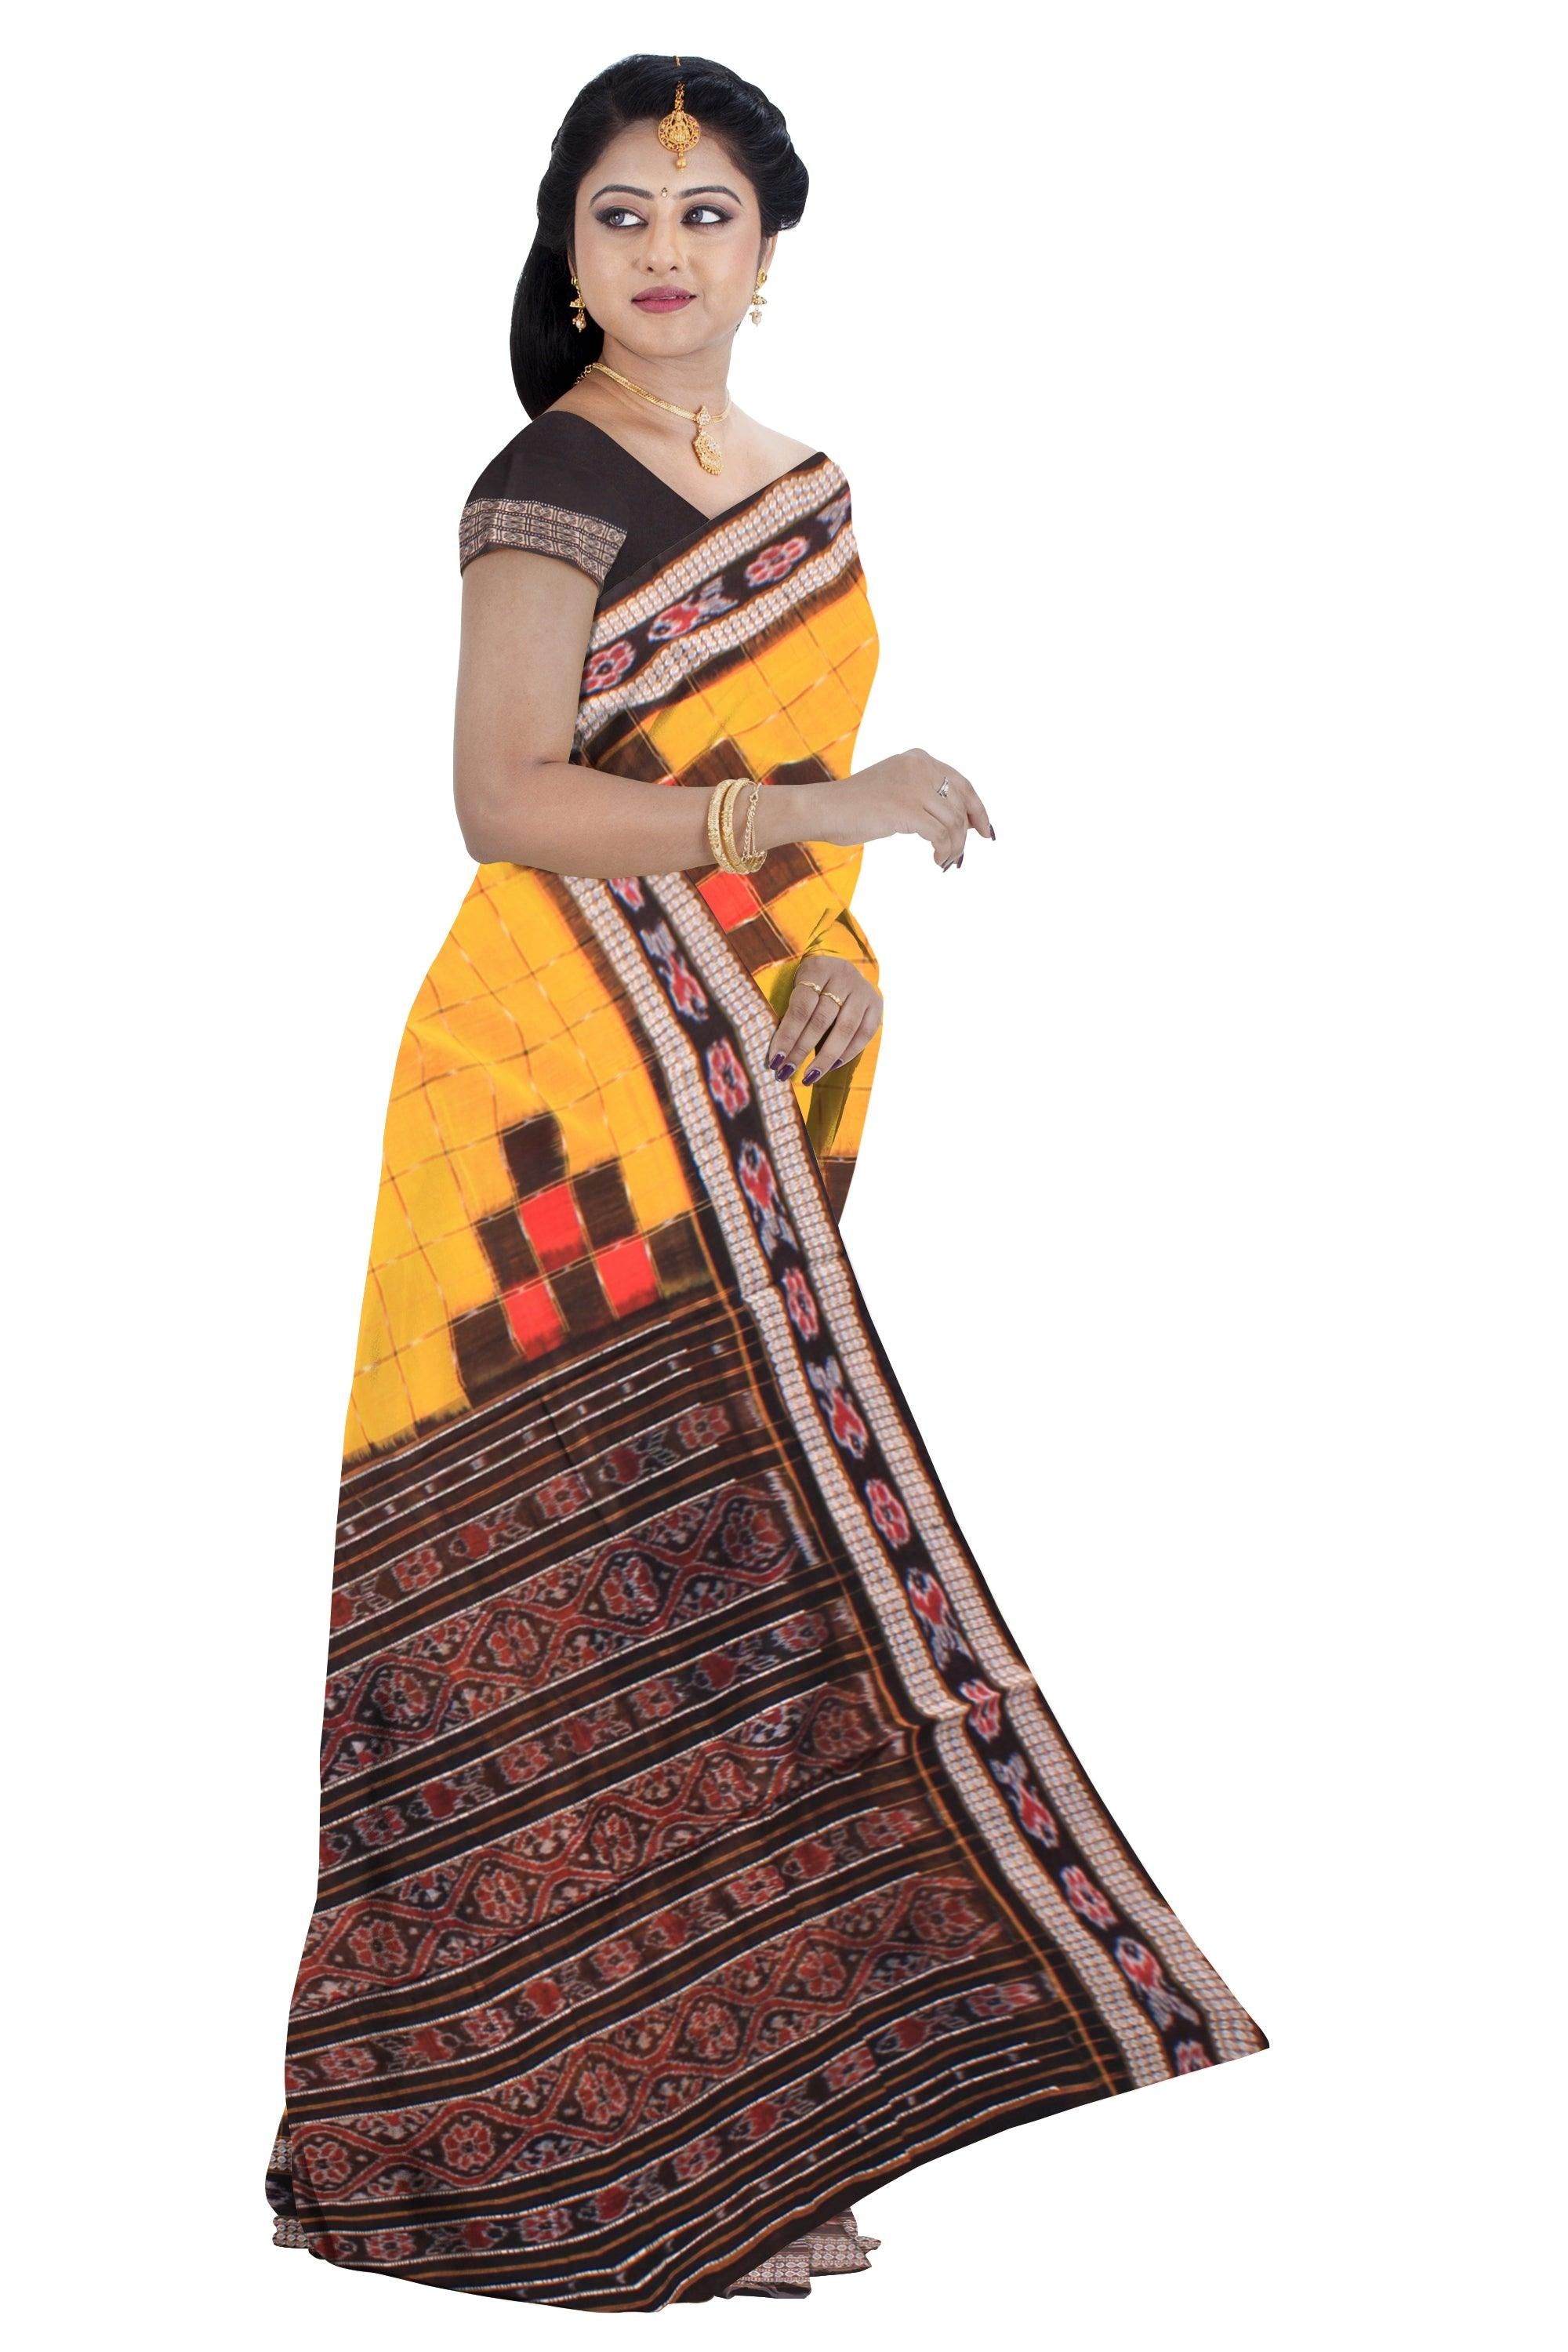 Samblpuri Sapta cotton  saree in Yellow and Black  colour border with blouse piece. - Koshali Arts & Crafts Enterprise